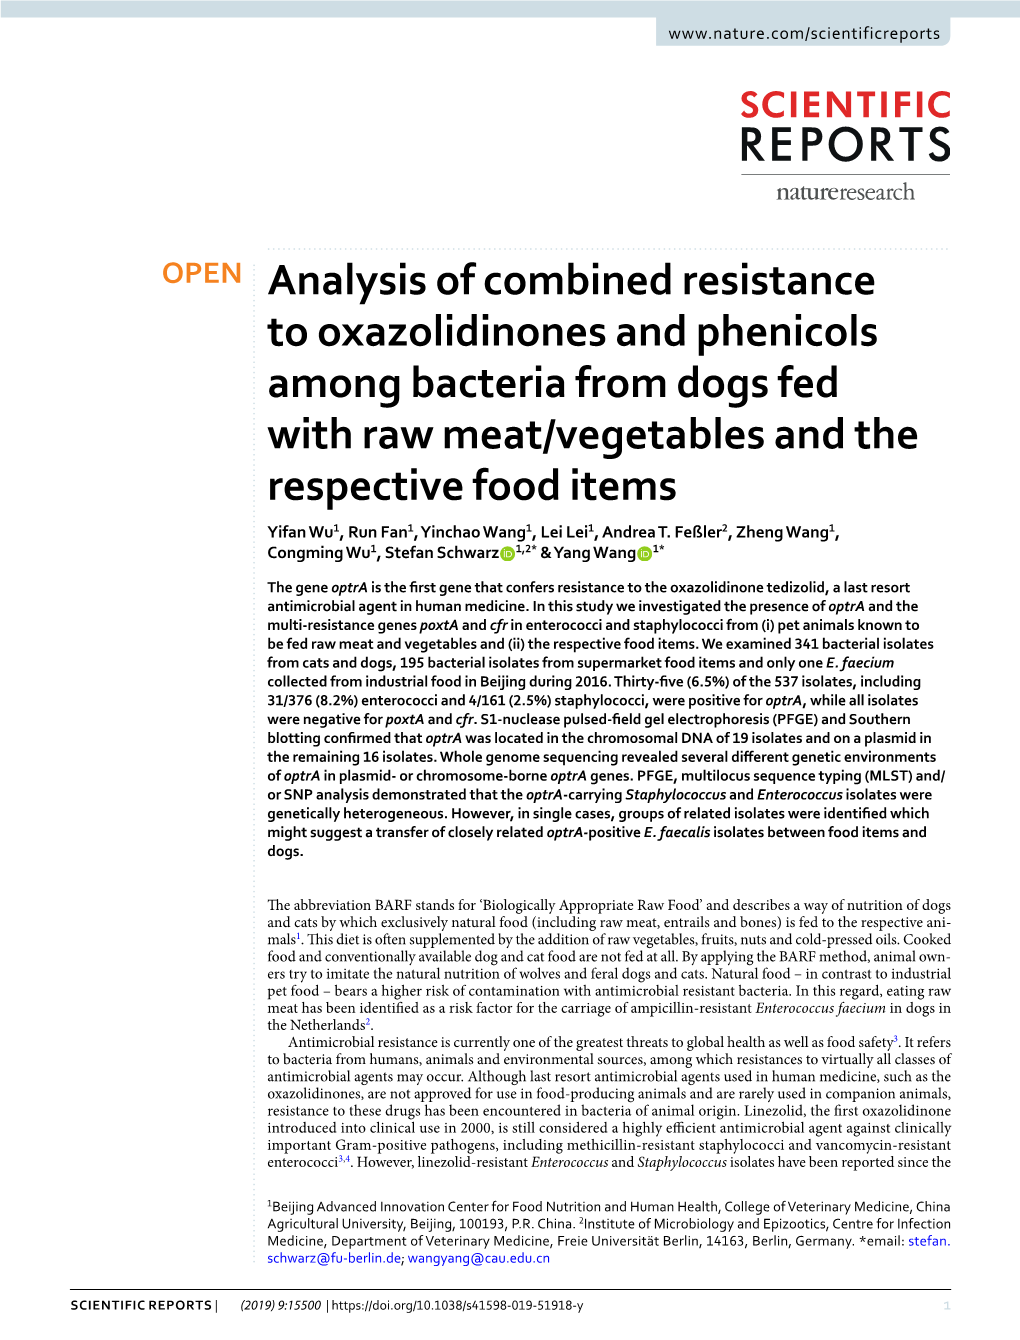 Analysis of Combined Resistance to Oxazolidinones and Phenicols